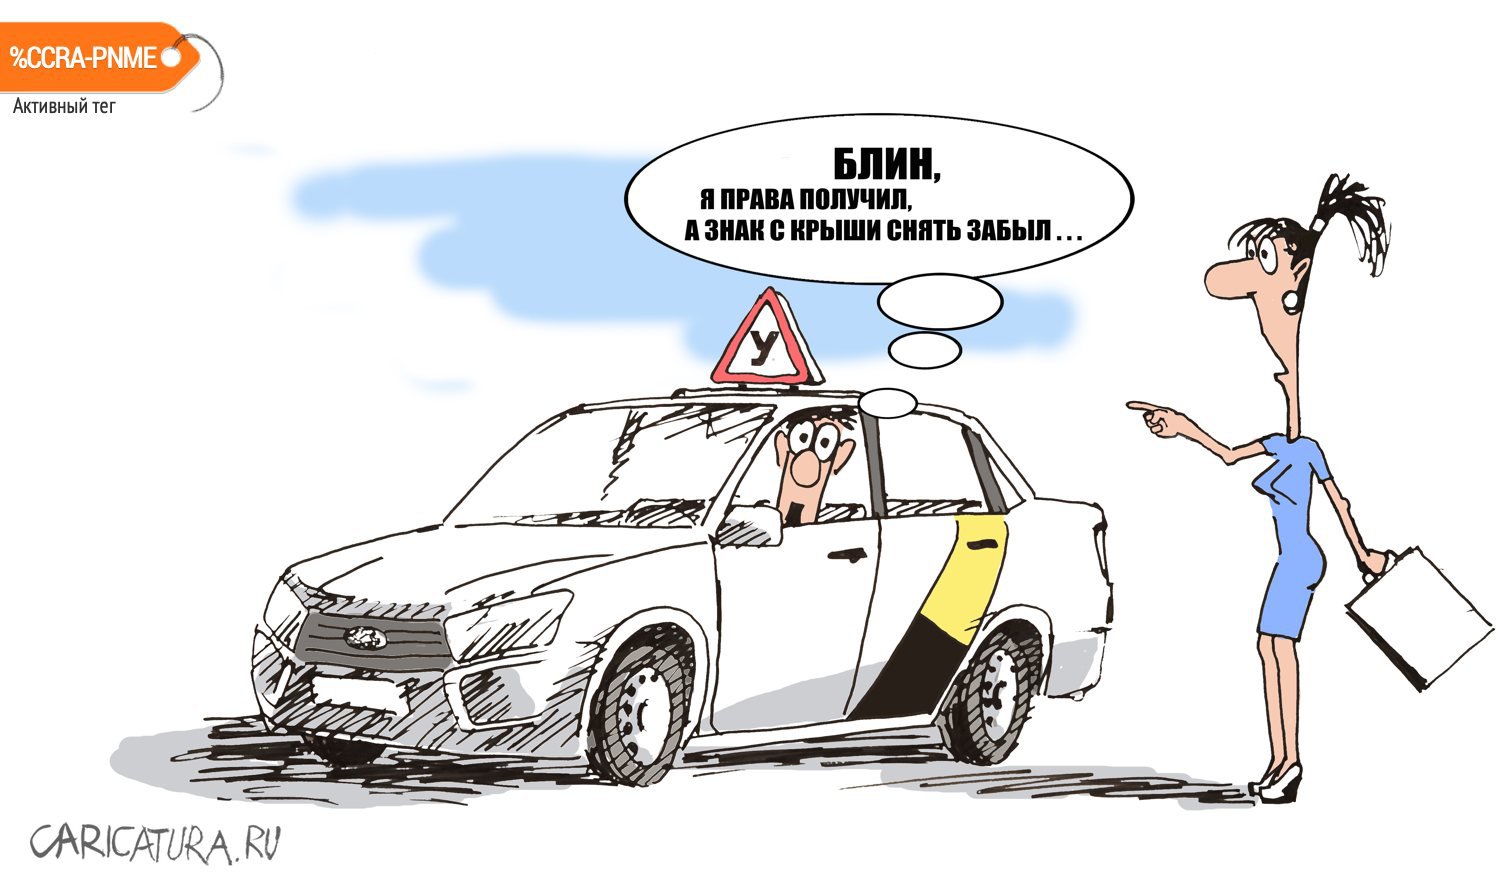 Карикатура "Яндекс такси", Валерий Осипов